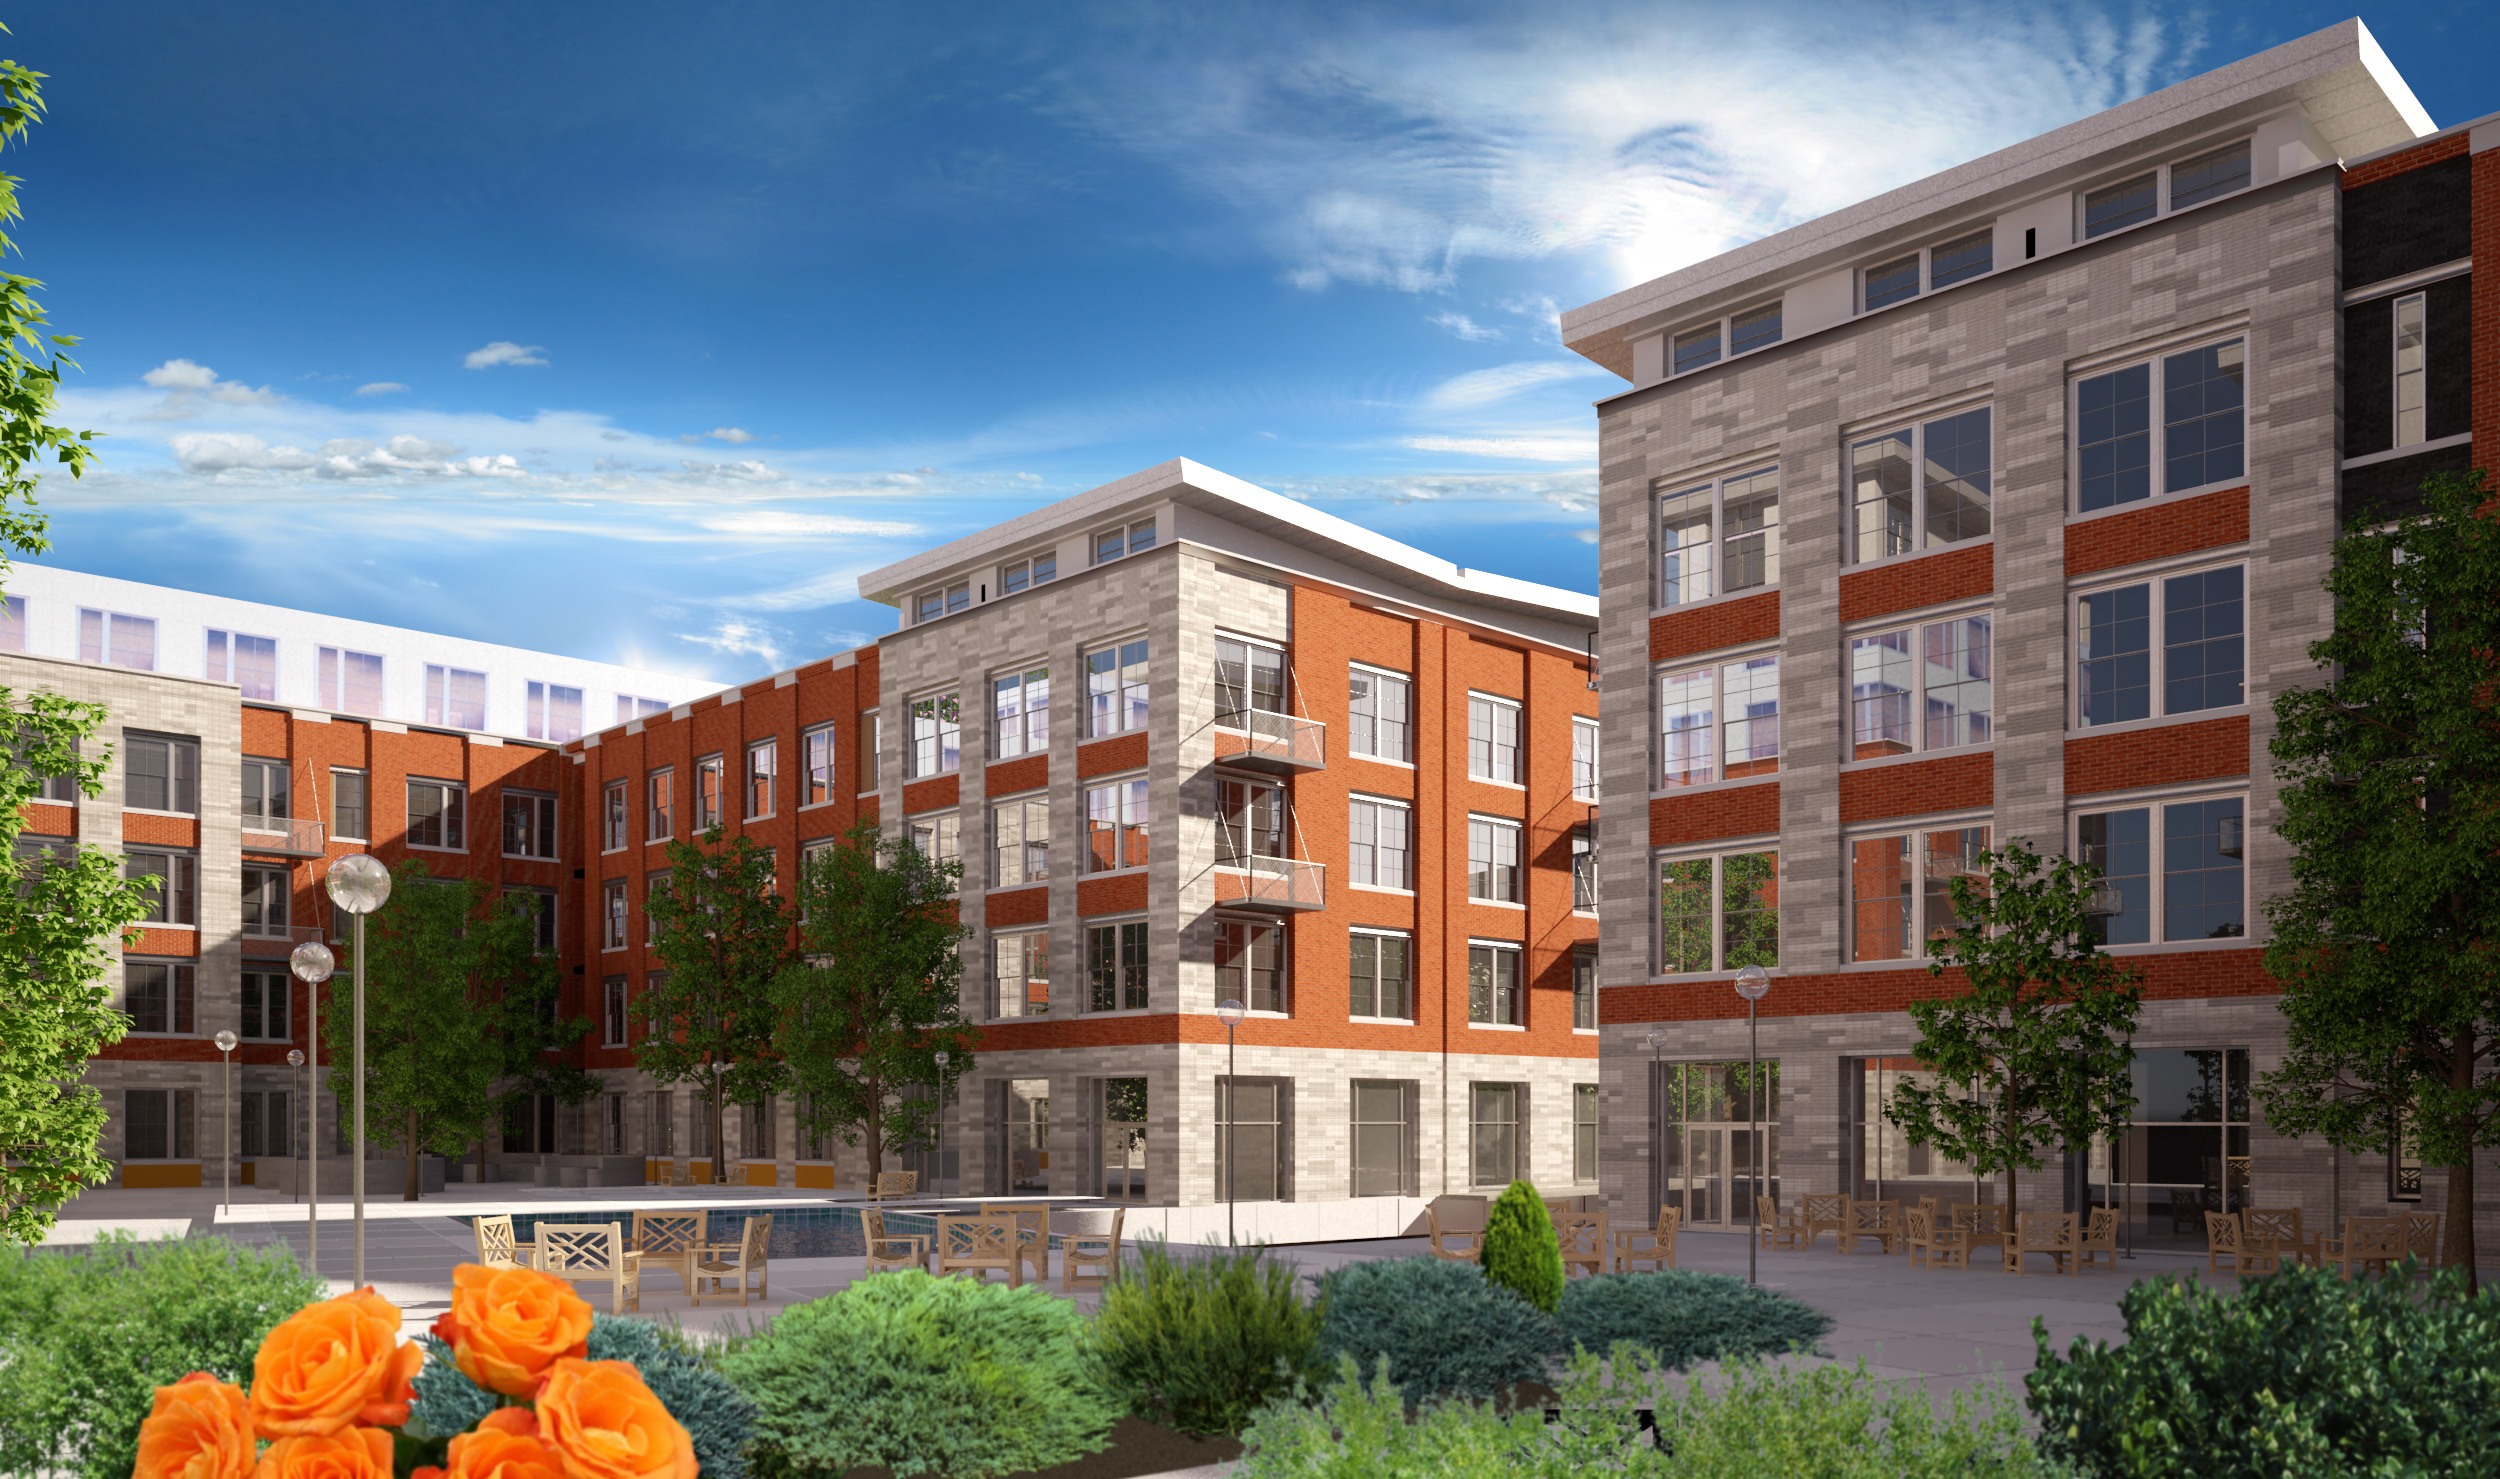 Passivhaus Apartment Complex Would be a Giant | GreenBuildingAdvisor.com